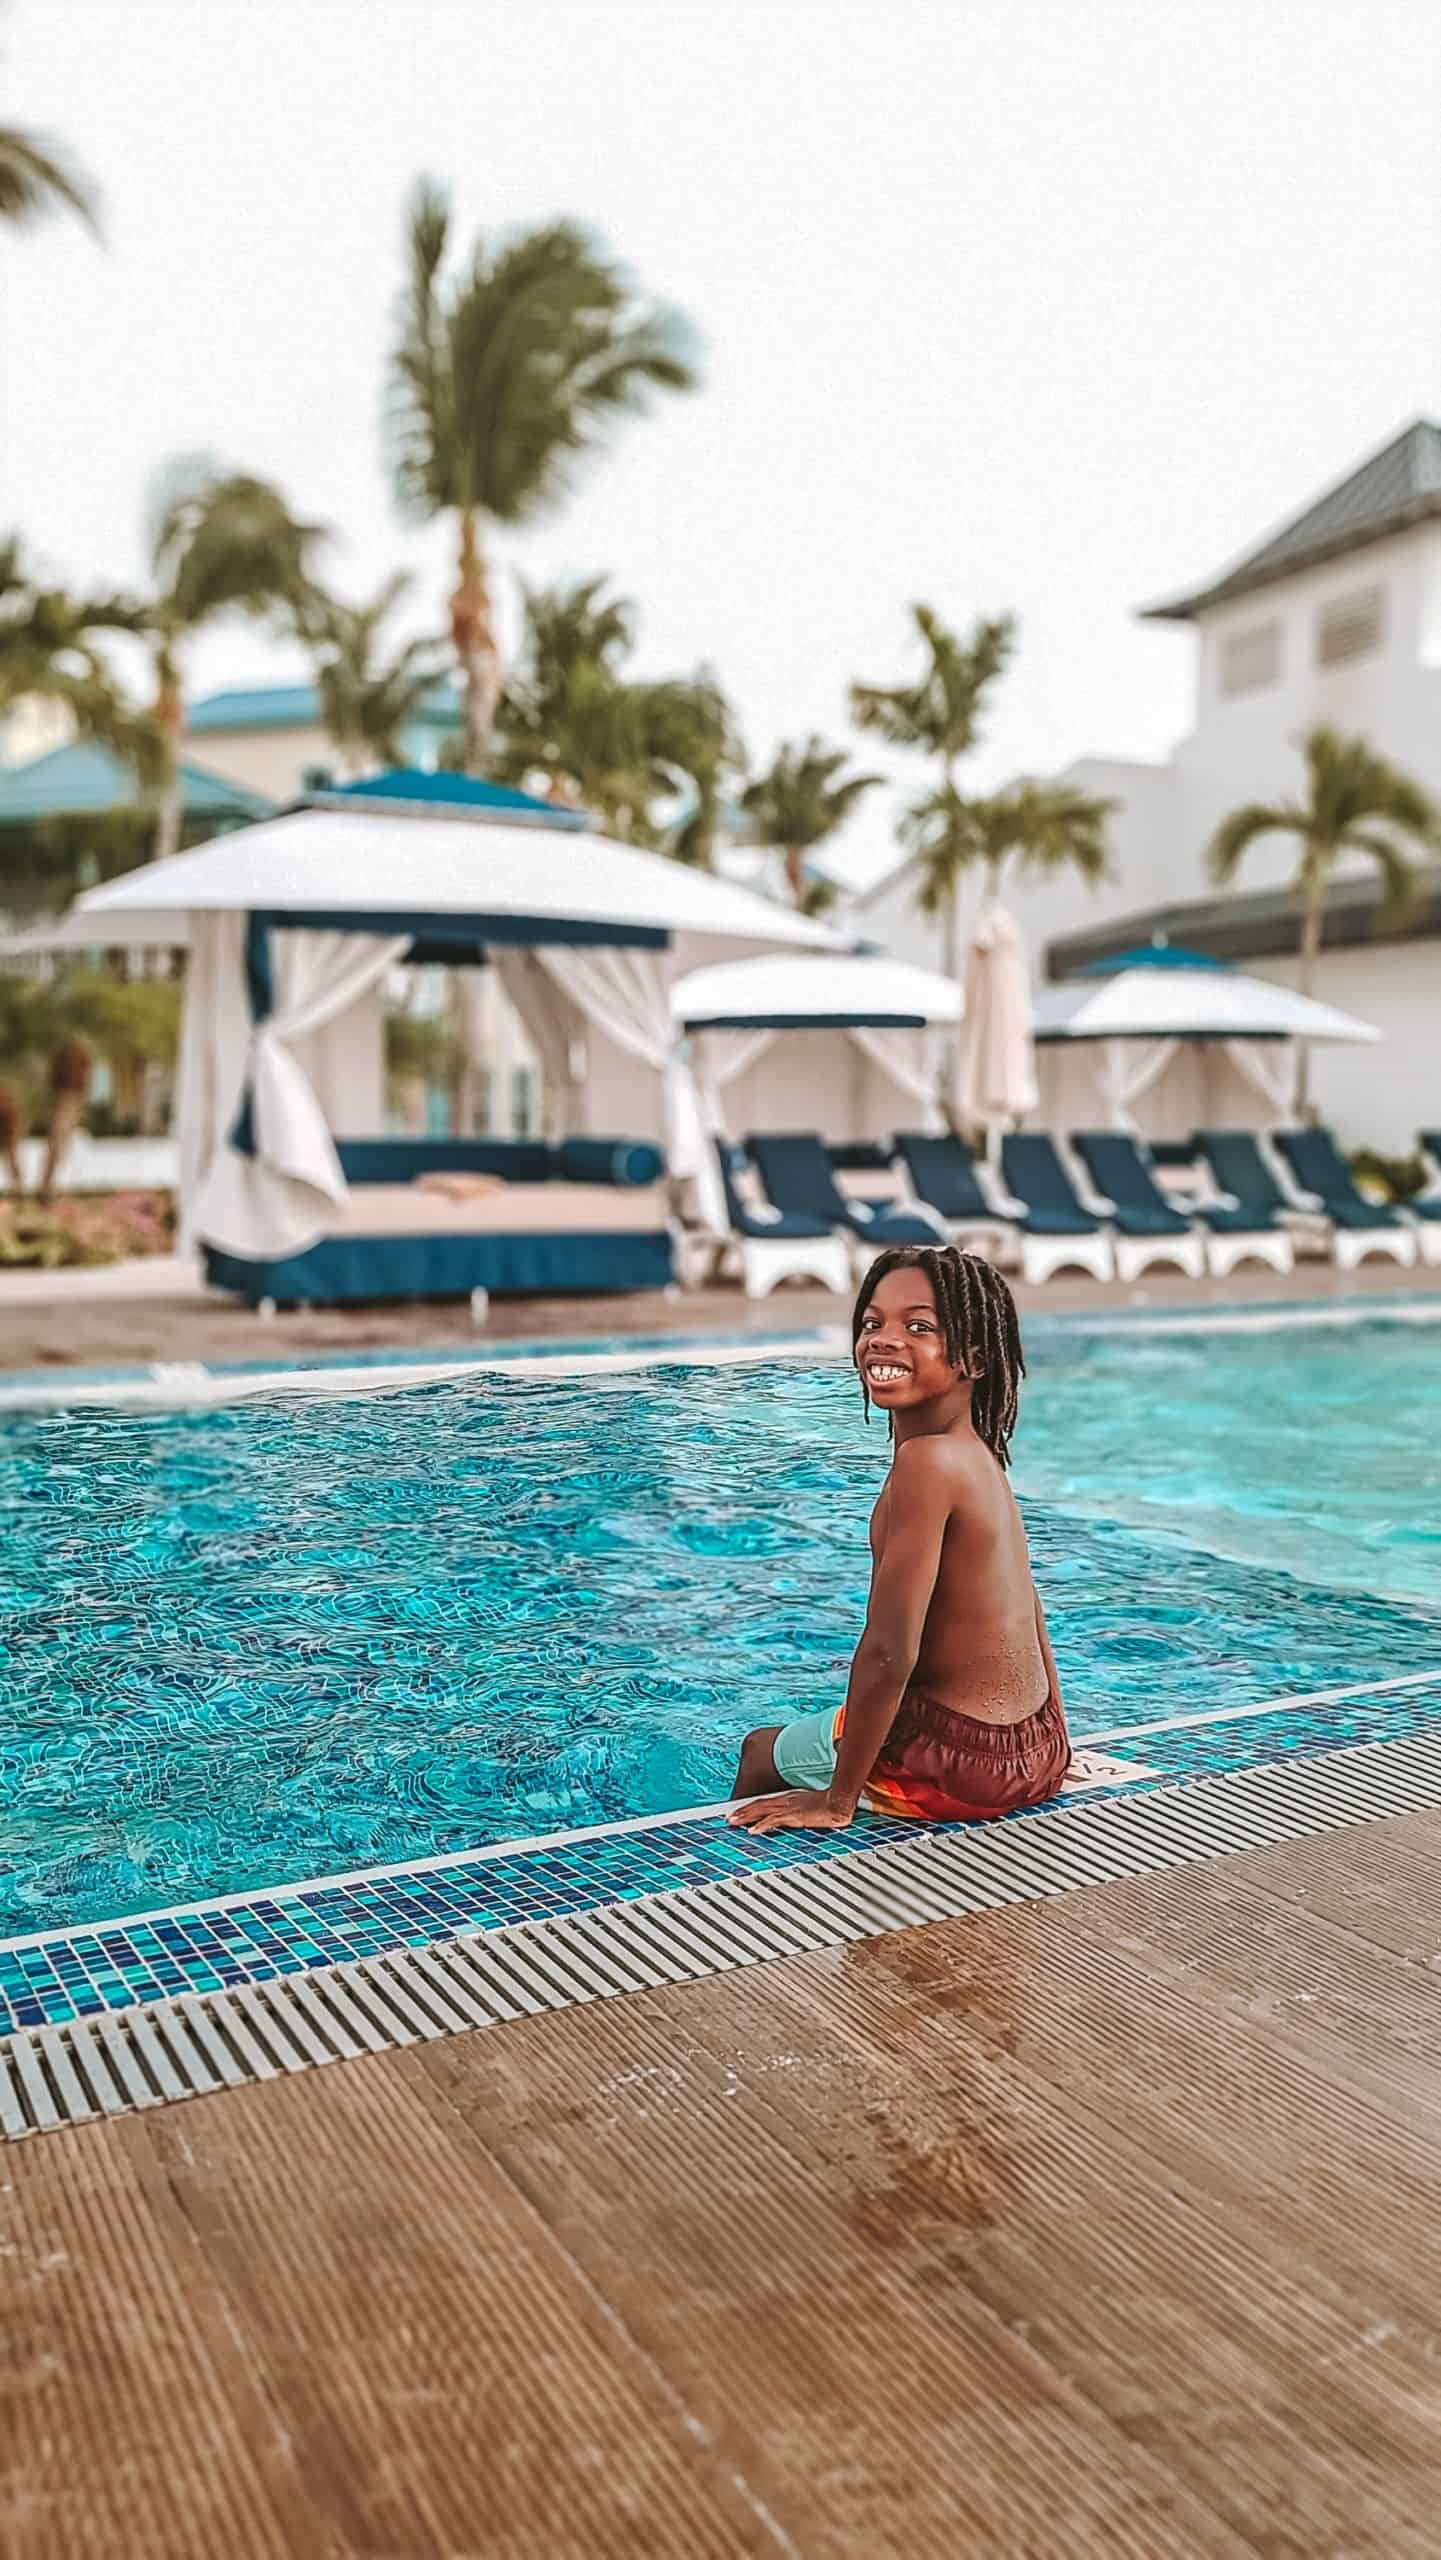 Beaches Resorts pool